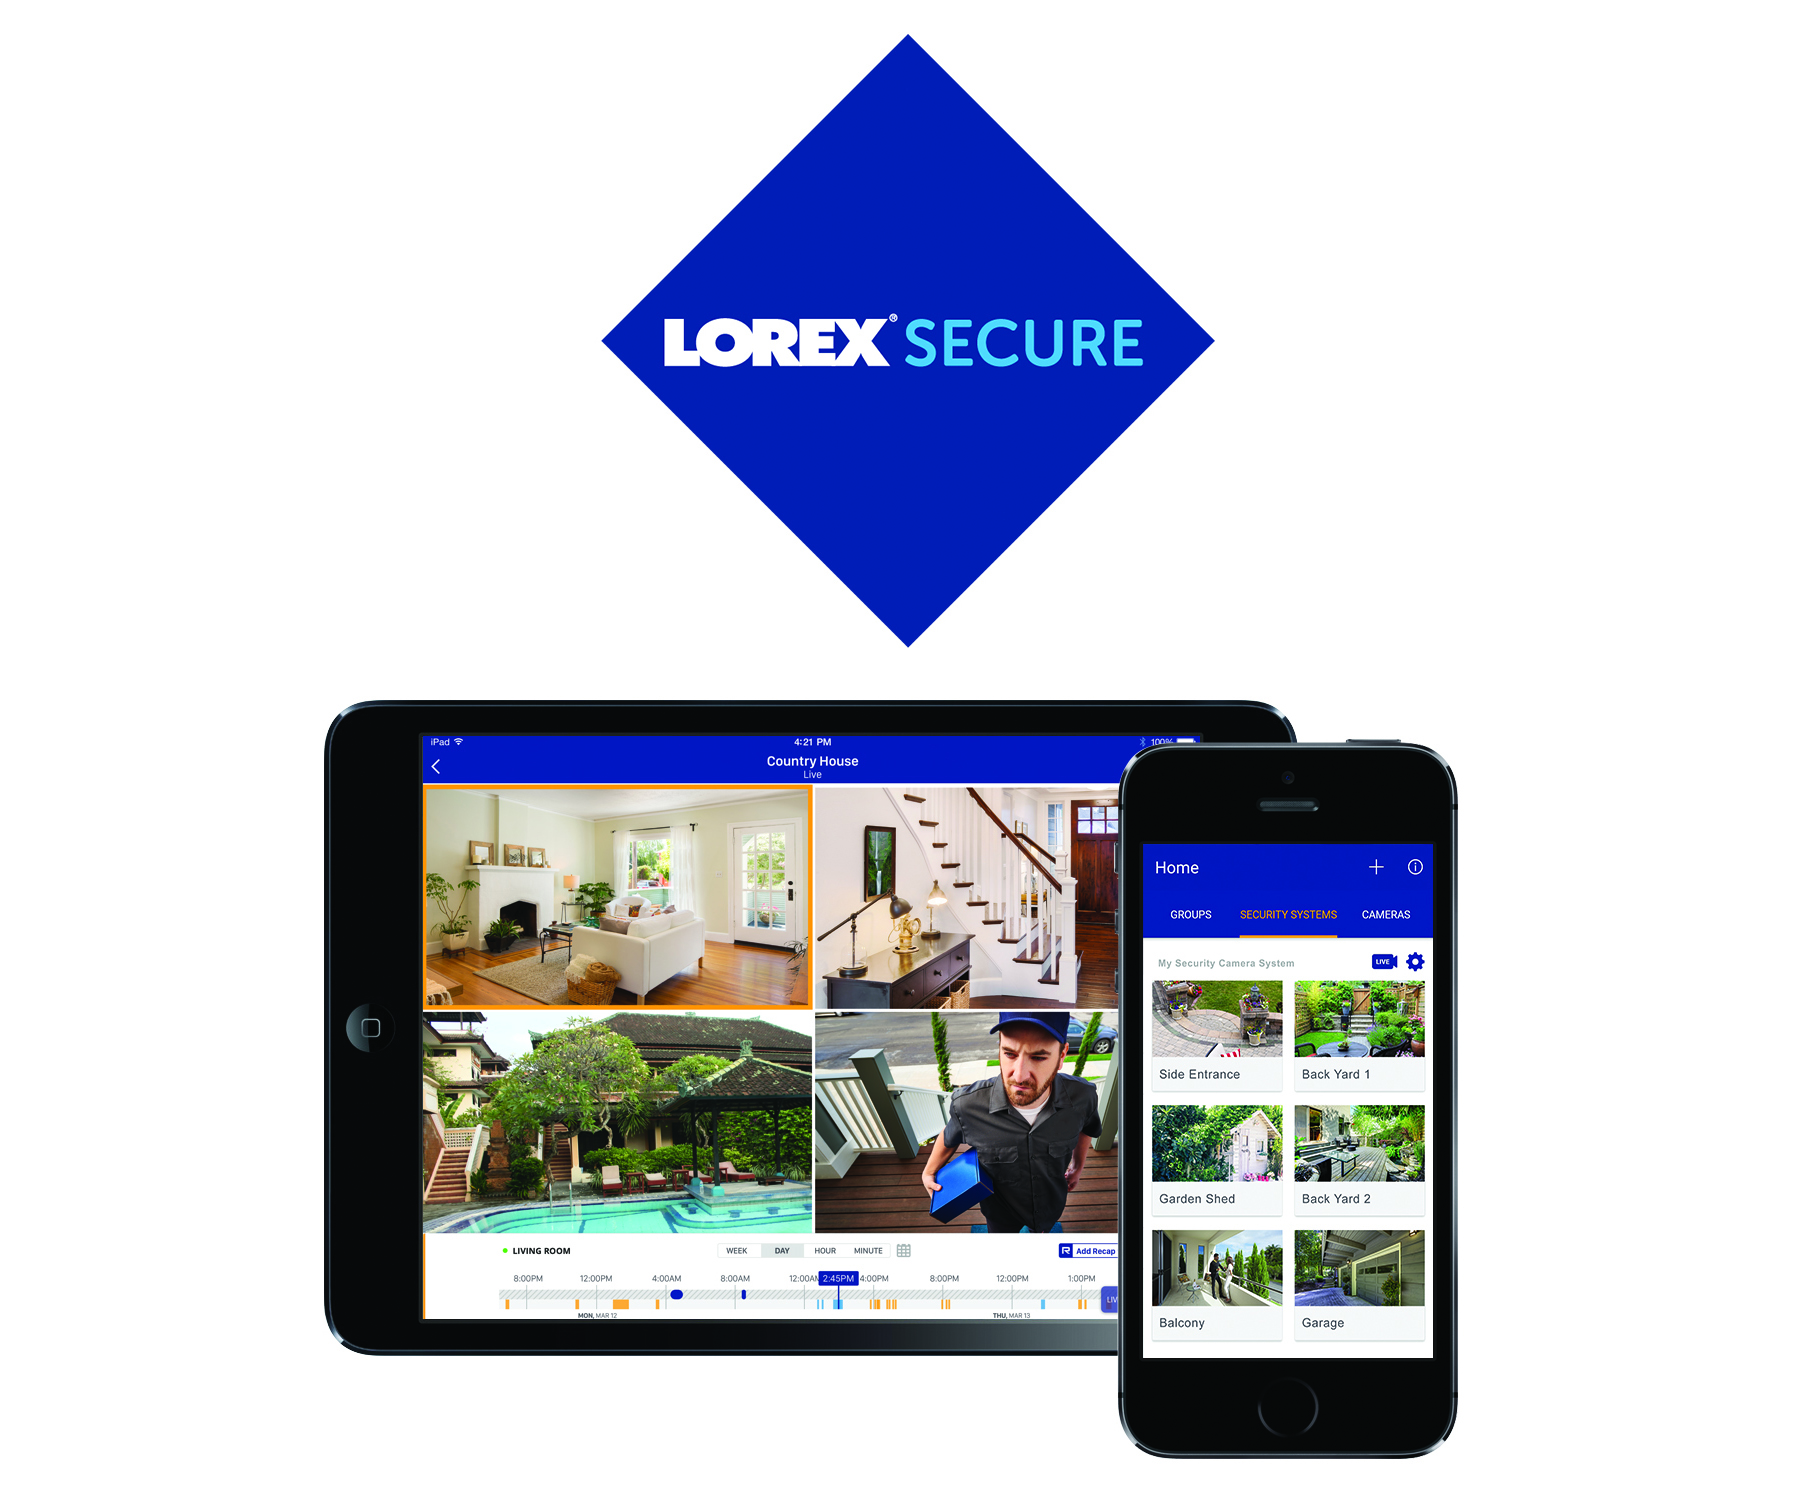 lorex home app